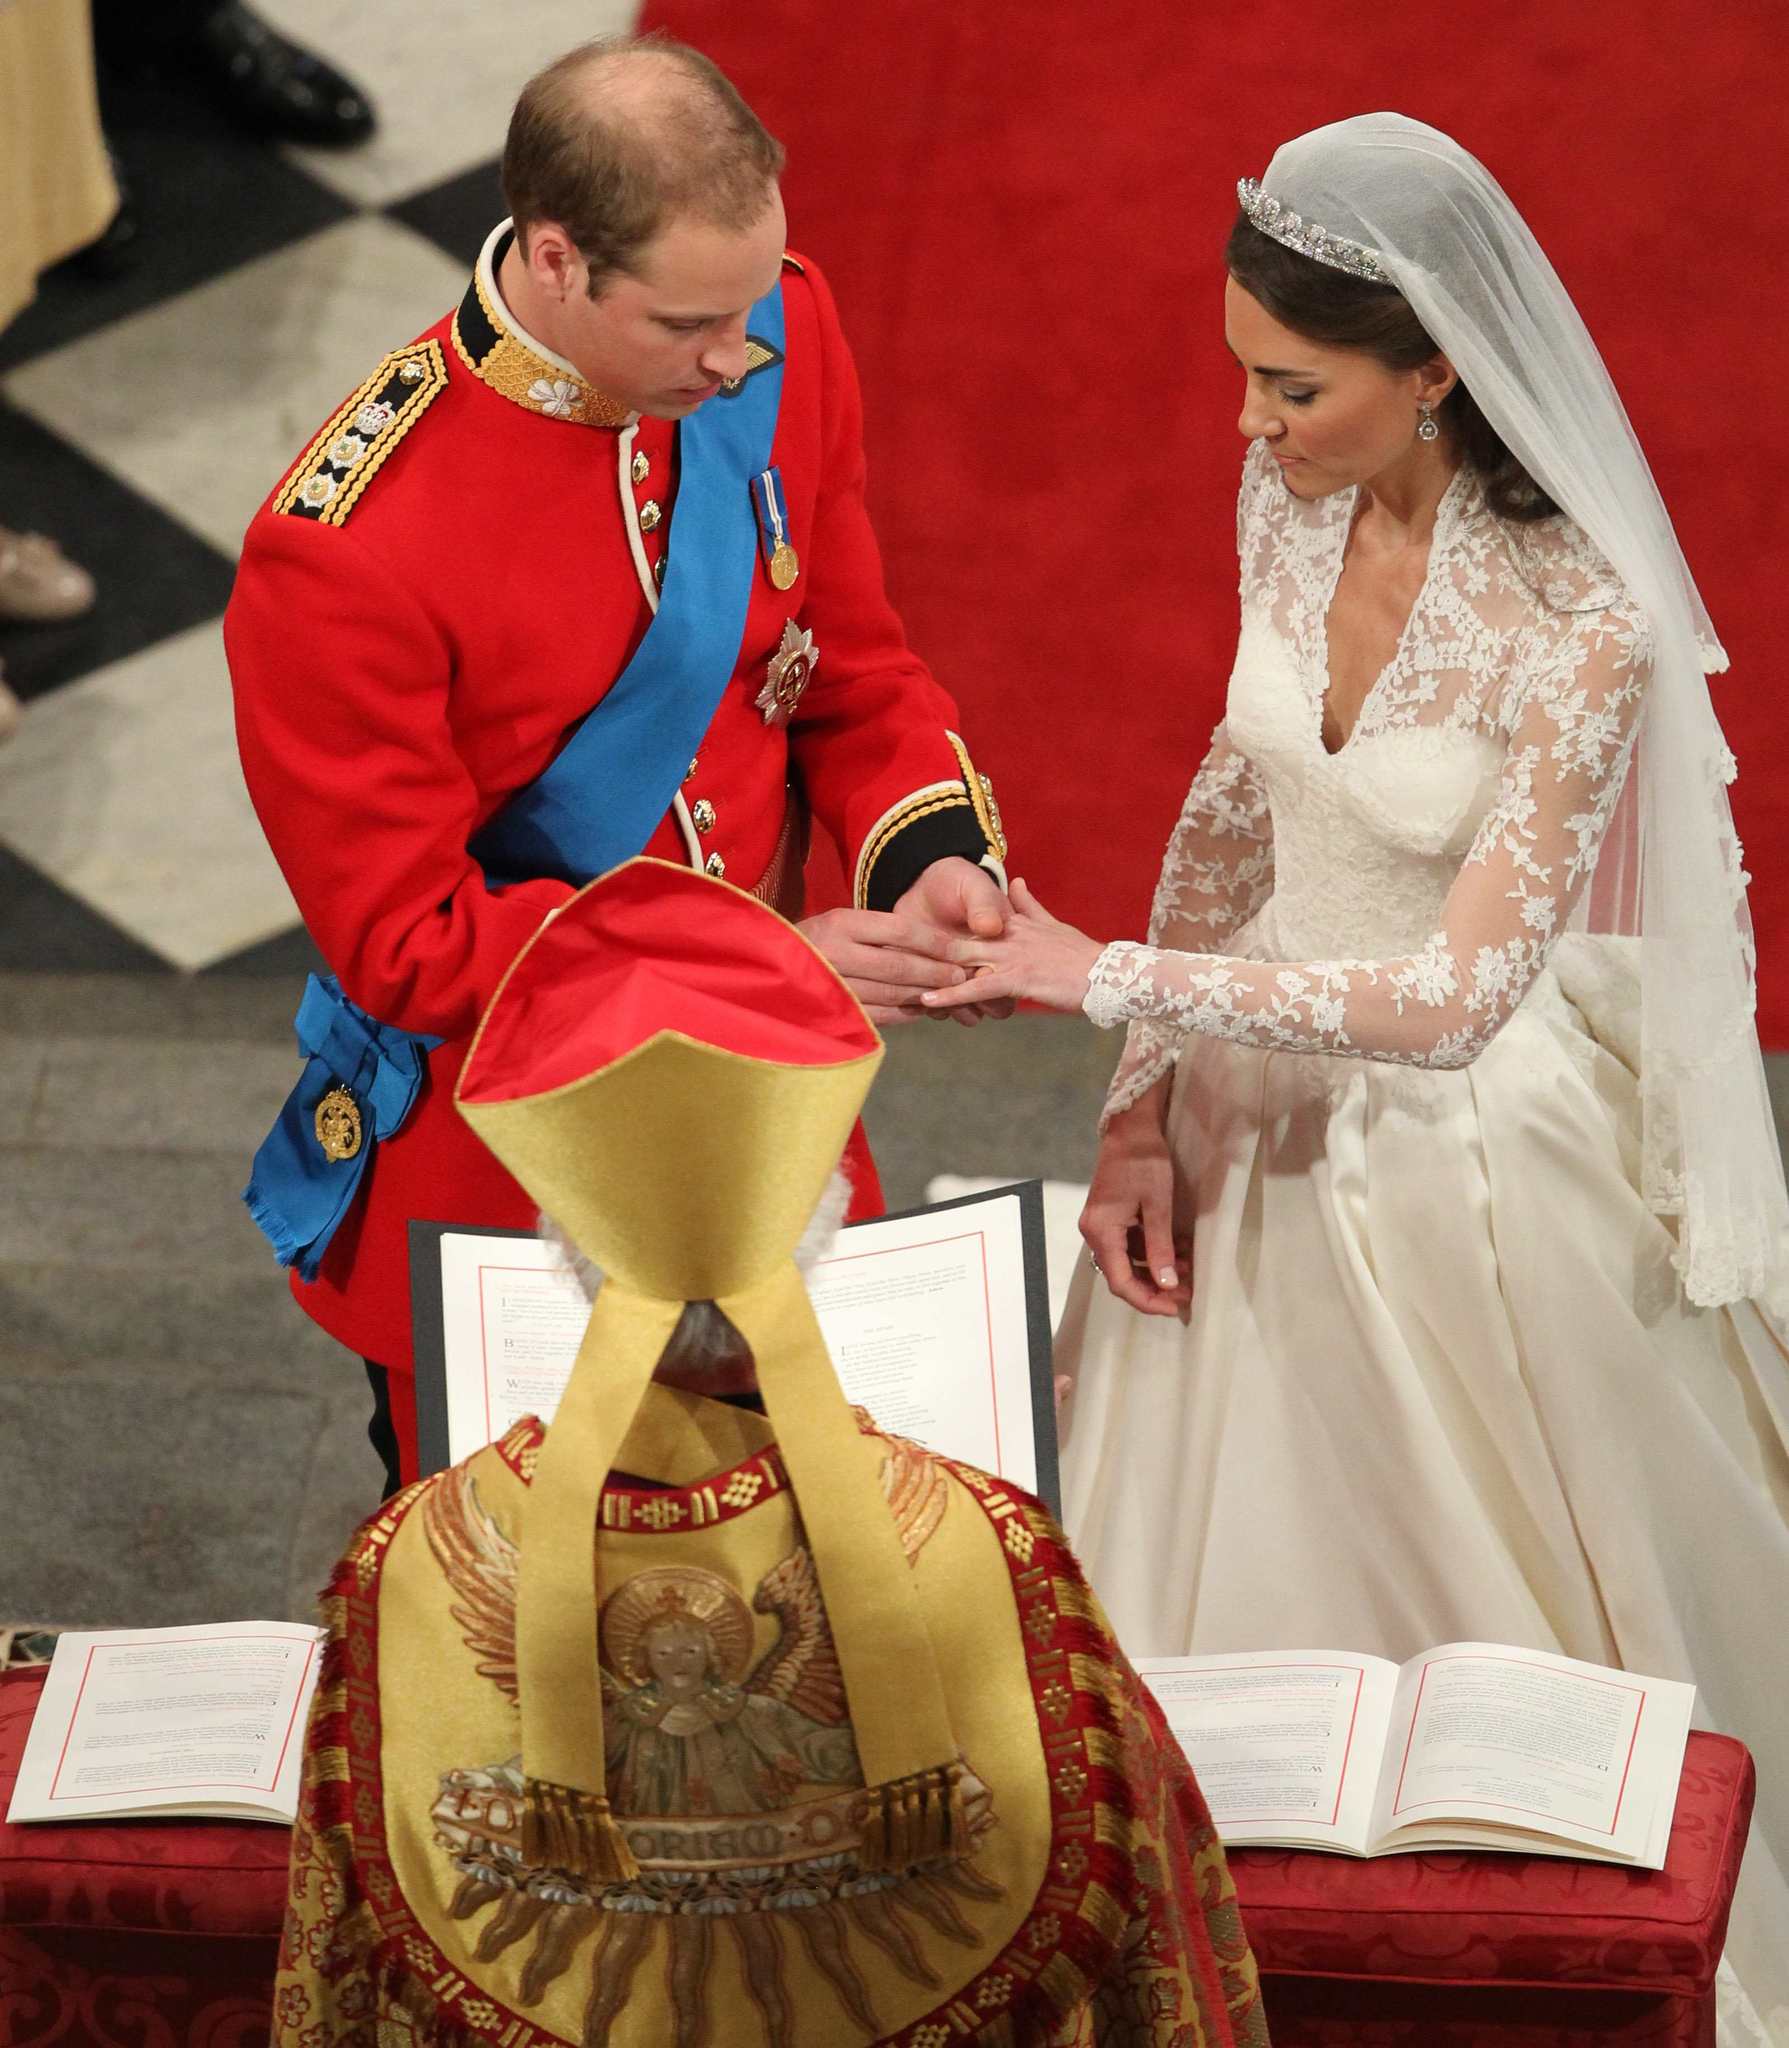 Prince William and Catherine Duchess of Cambridge